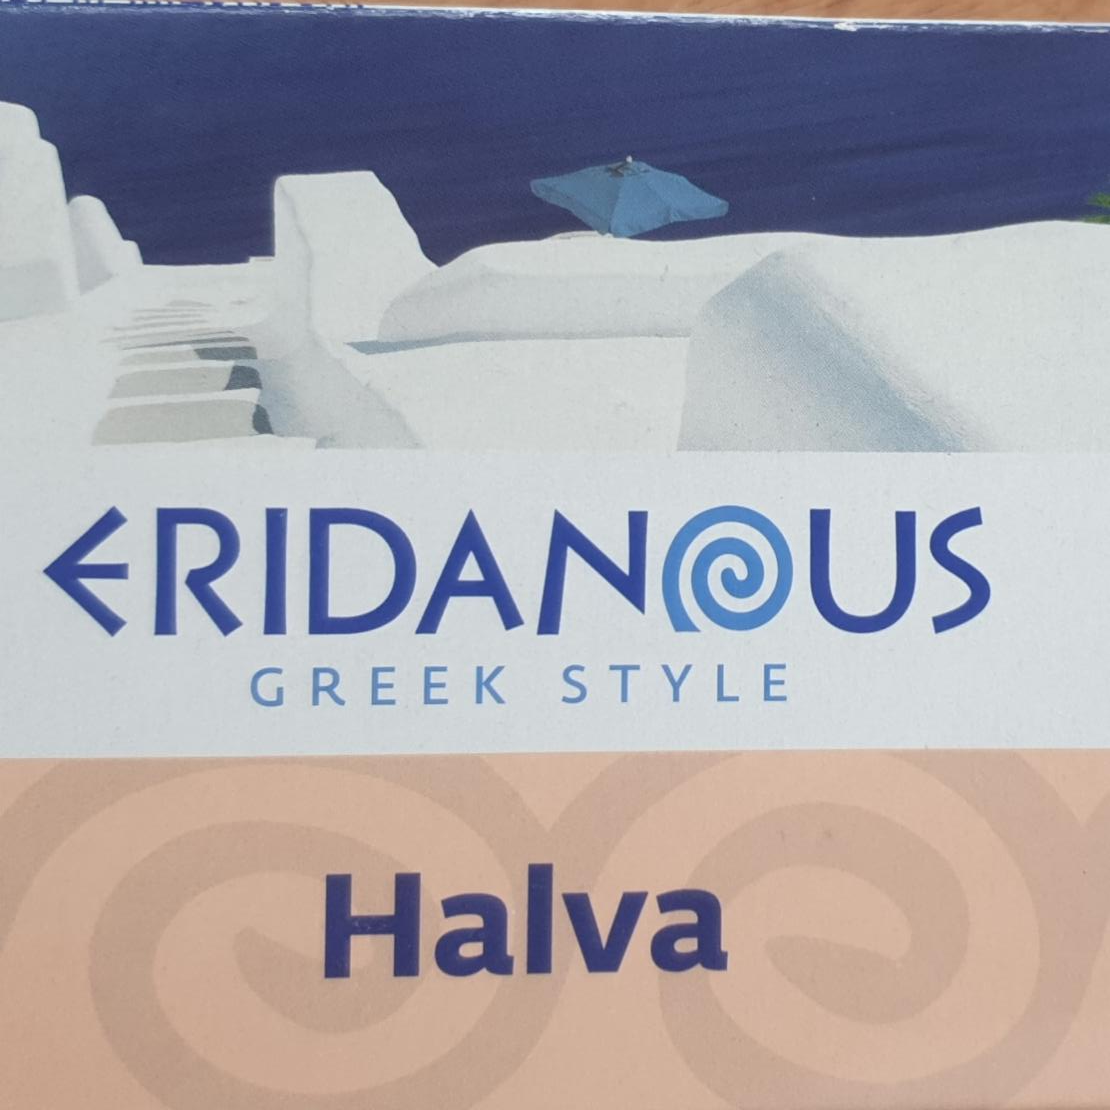 Zdjęcia - Eridanous Greek Style Halva Vanilla Flavor